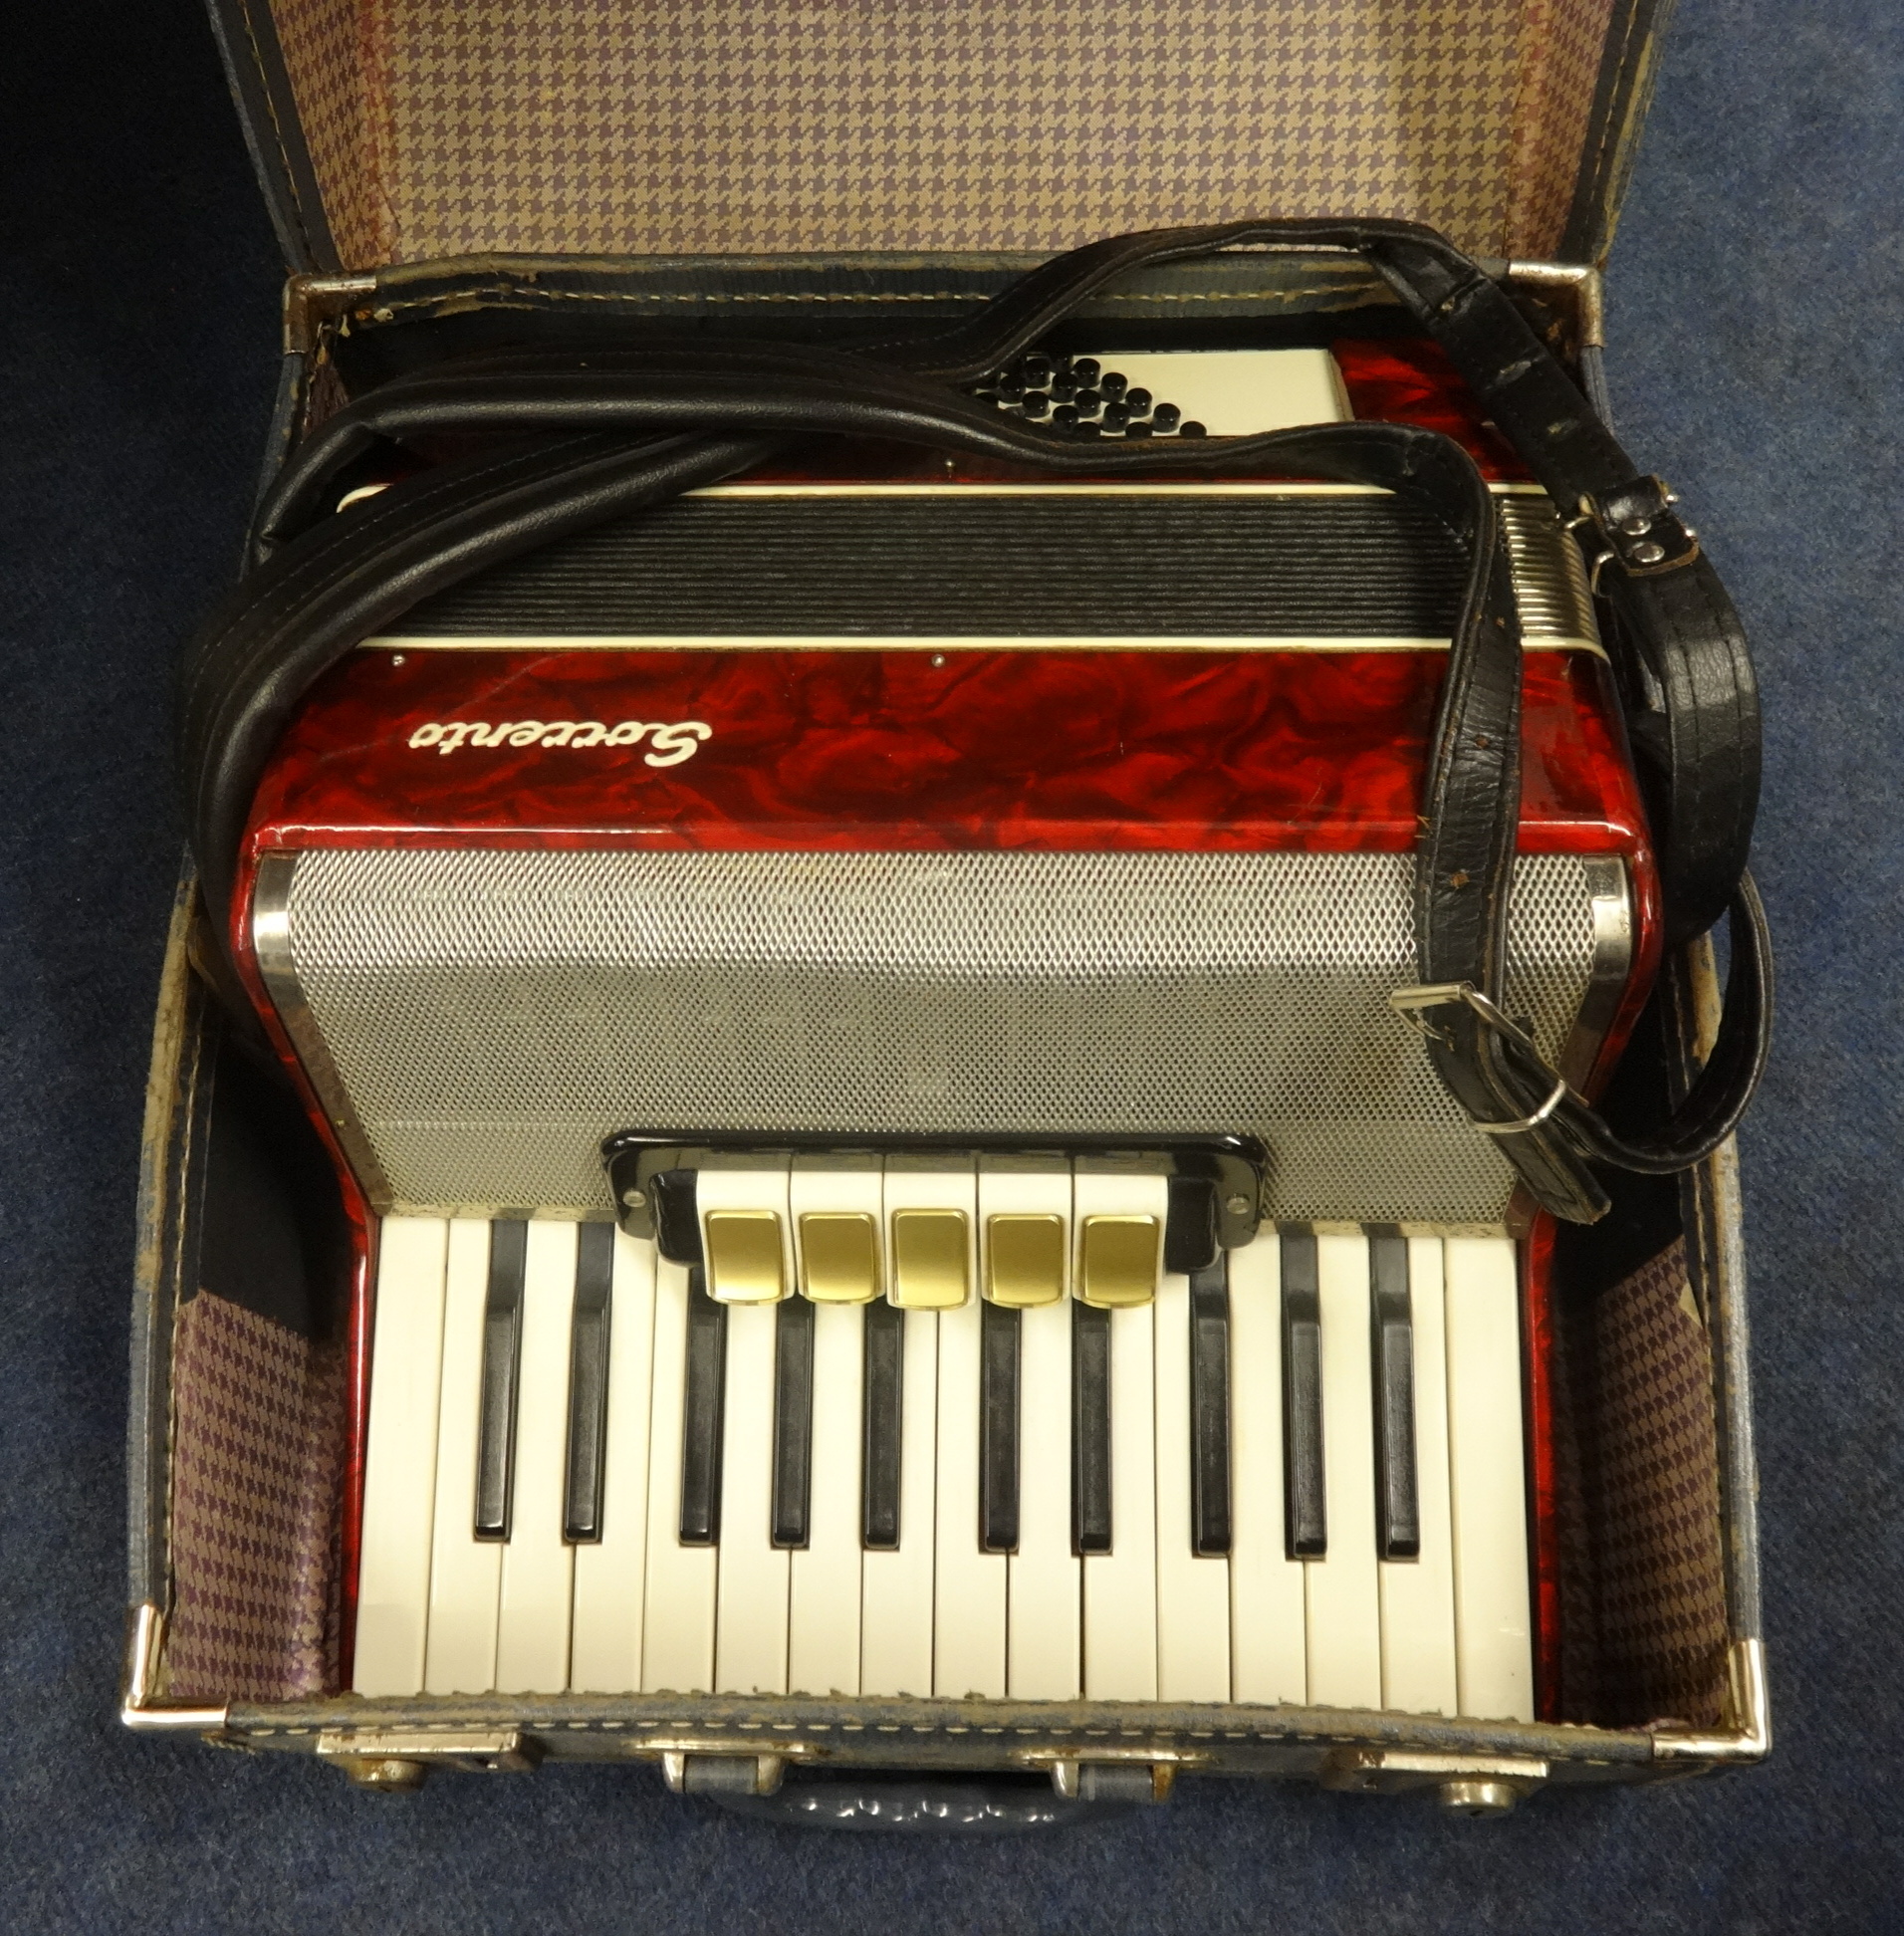 A Sorrento piano accordion, cased.